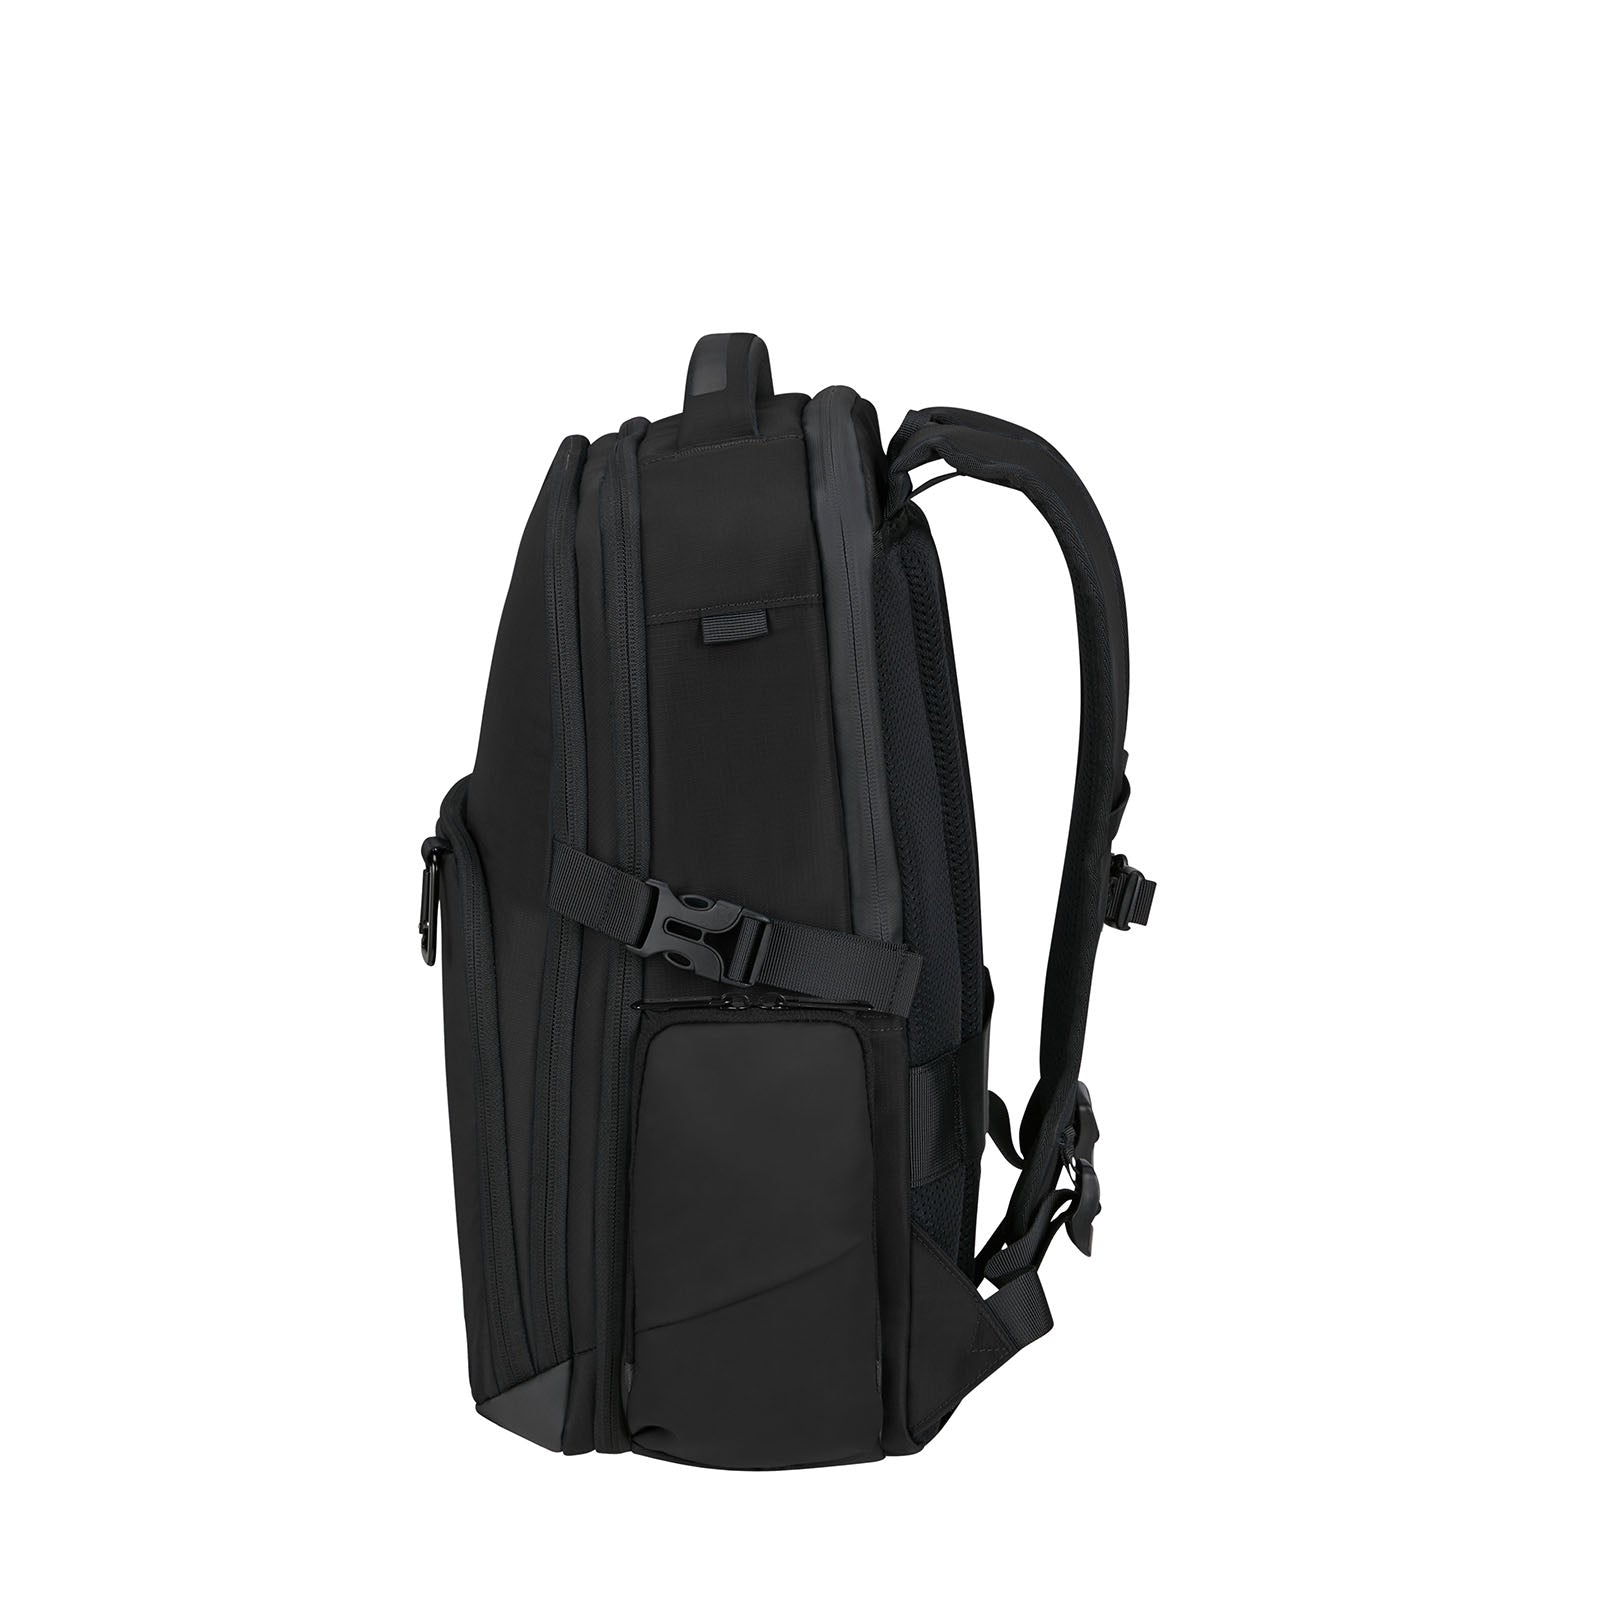 Samsonite-Biz2go-15-Inch-Laptop-Backpack-Black-Side-RH